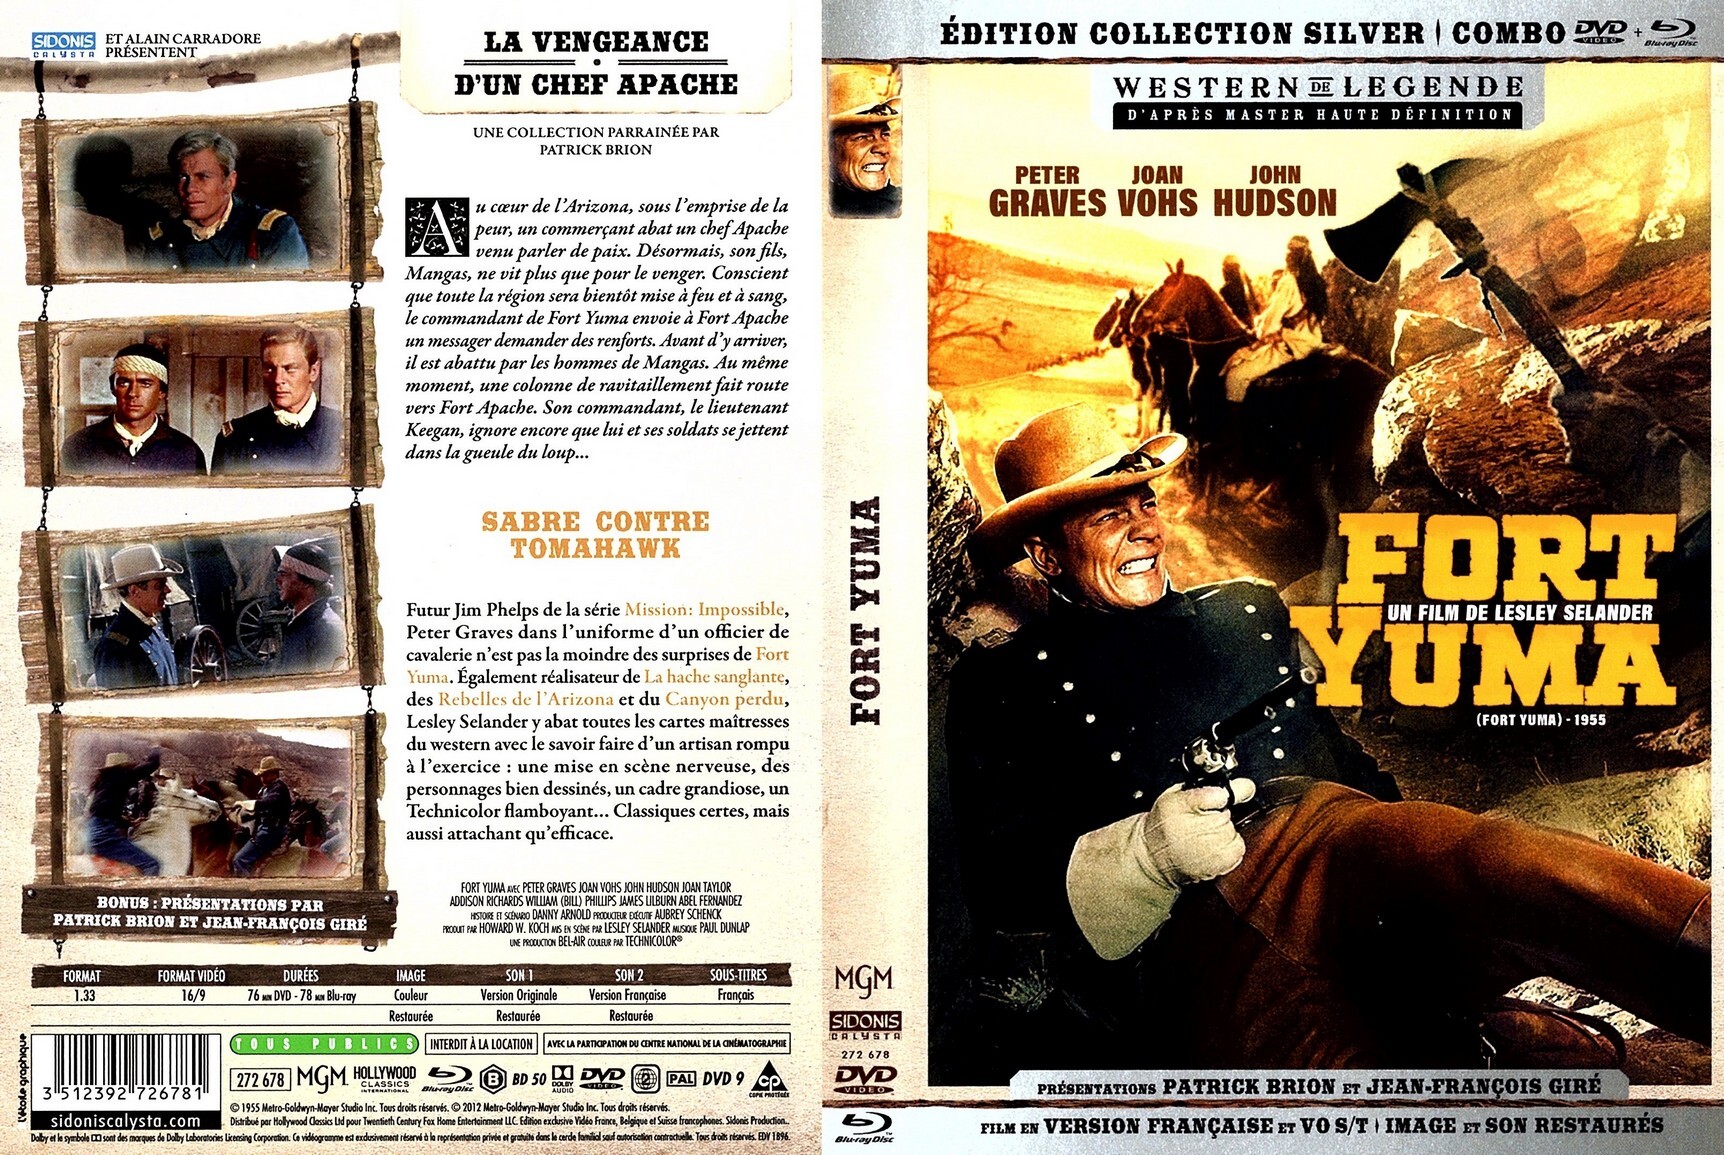 Jaquette DVD Fort Yuma v2